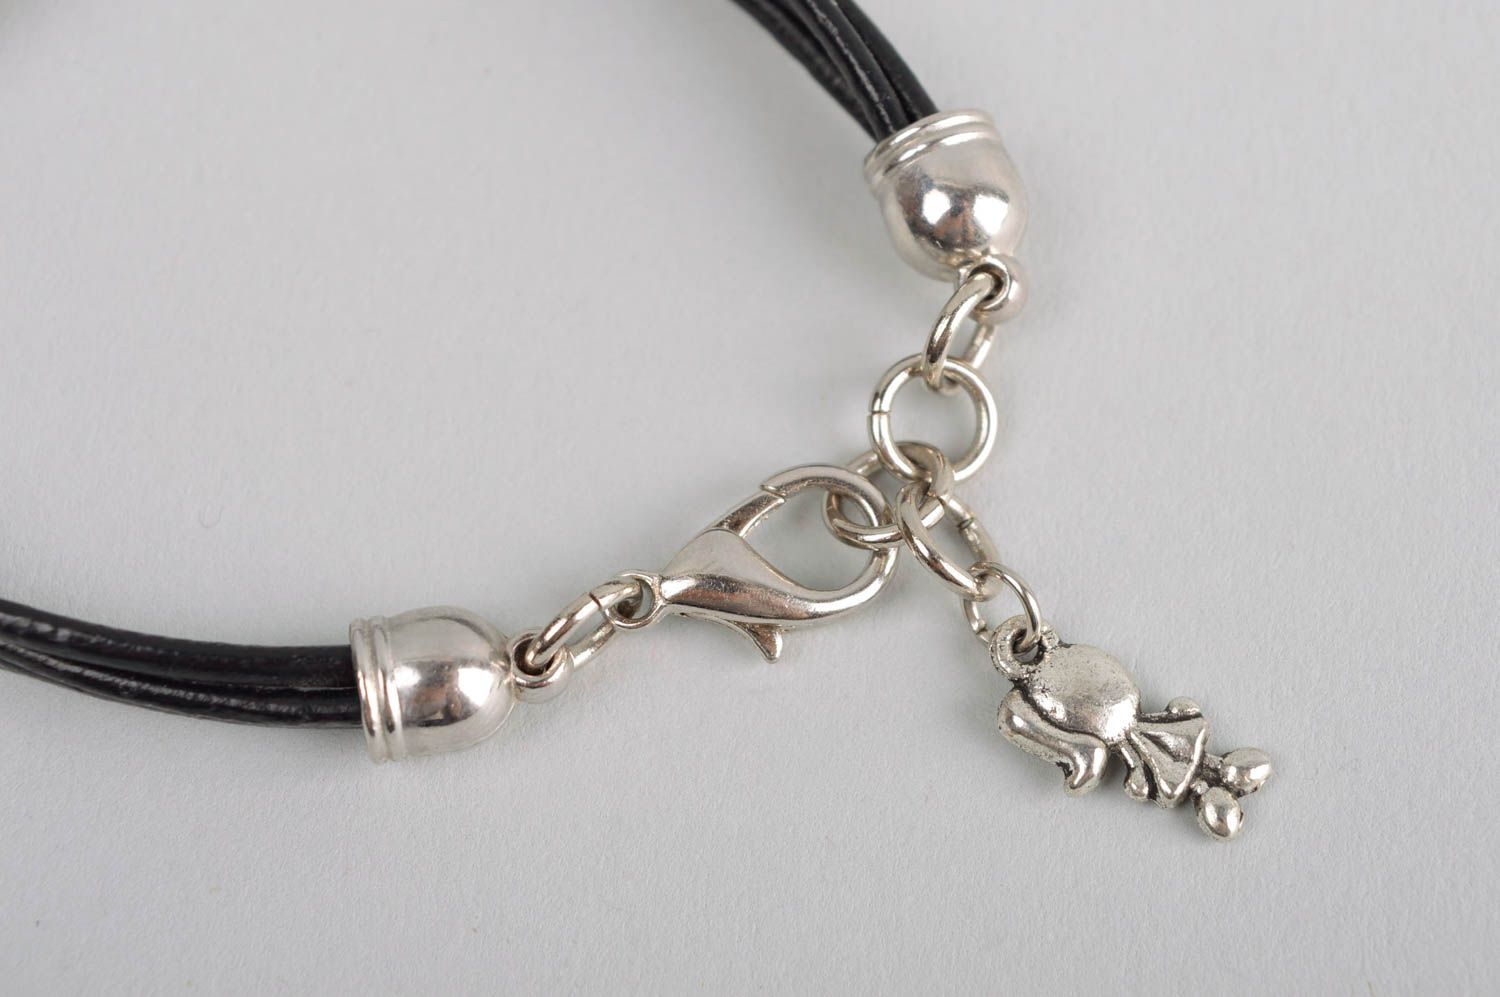 Unusual handmade gemstone bracelet leather bracelet designs gifts for her photo 4